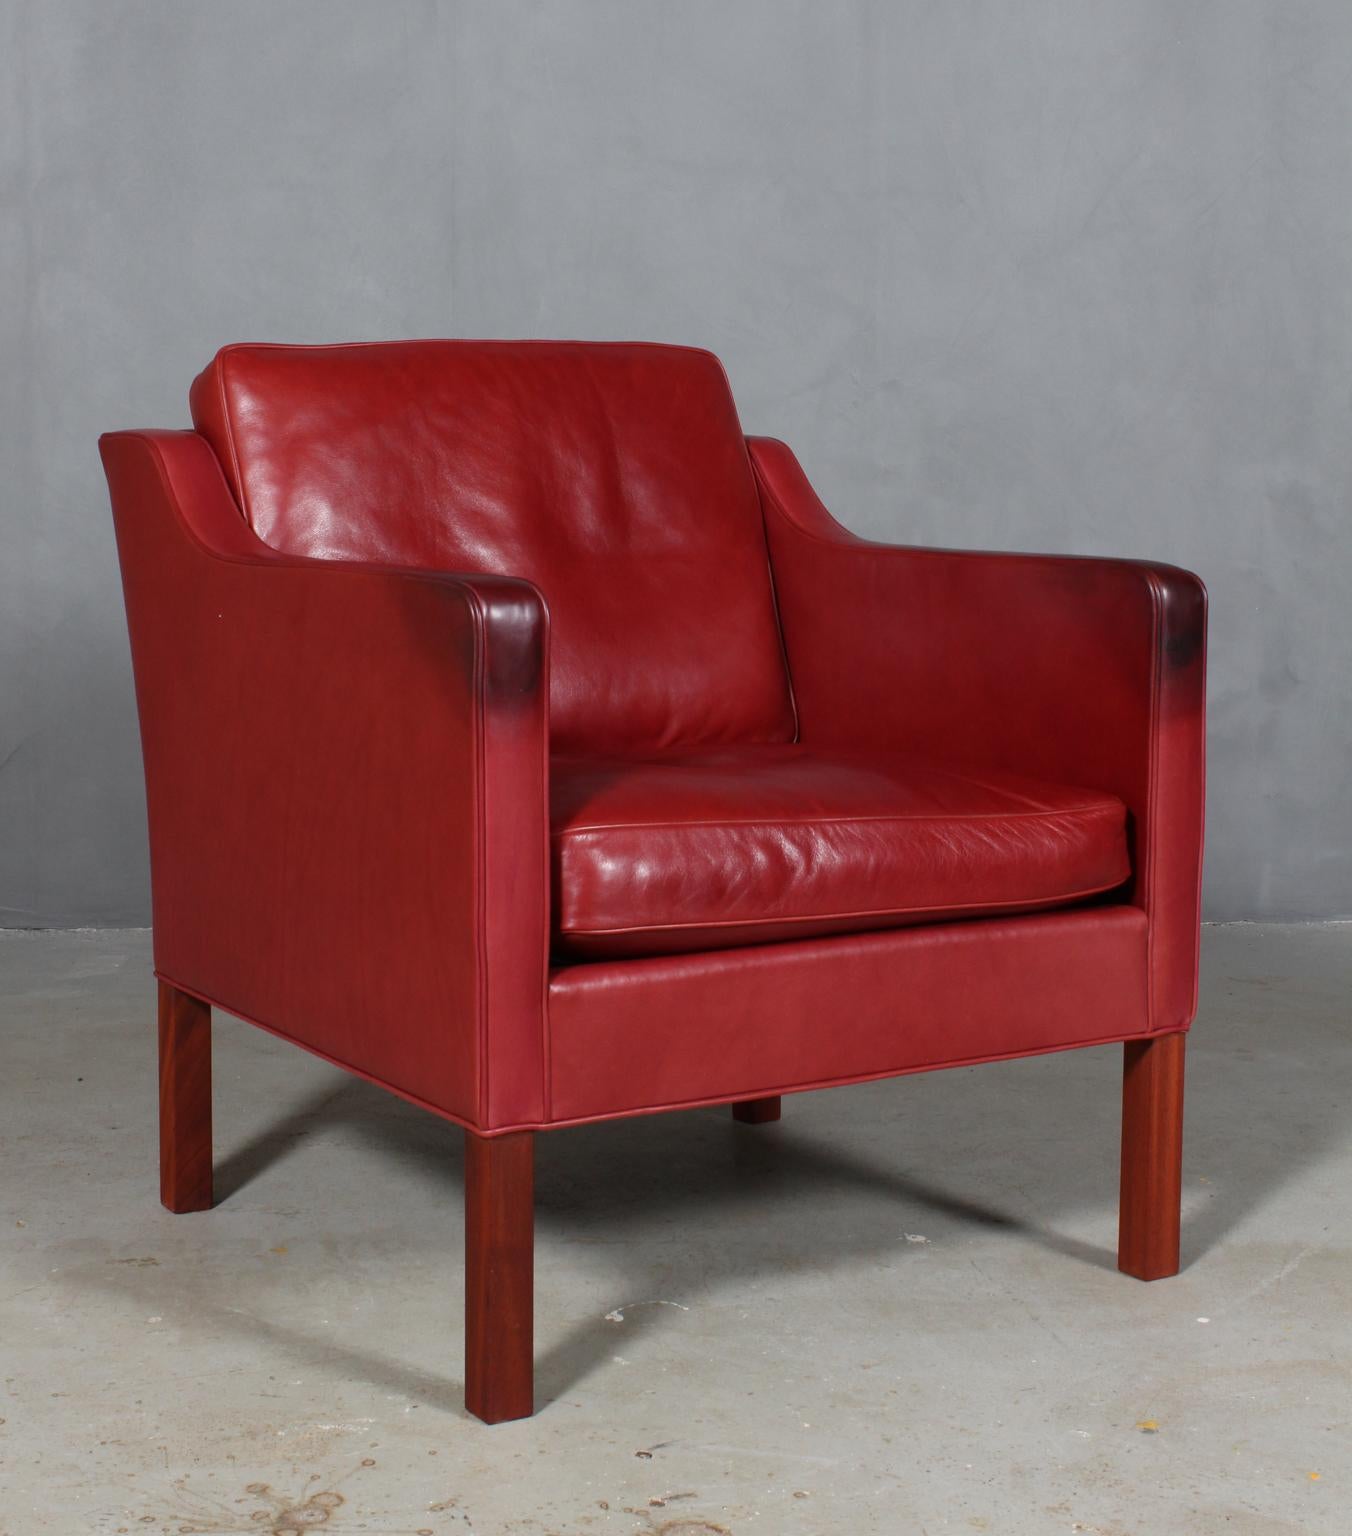 Scandinavian Modern Børge Mogensen Lounge Chair, Model 2321, Indian Red Original Leather